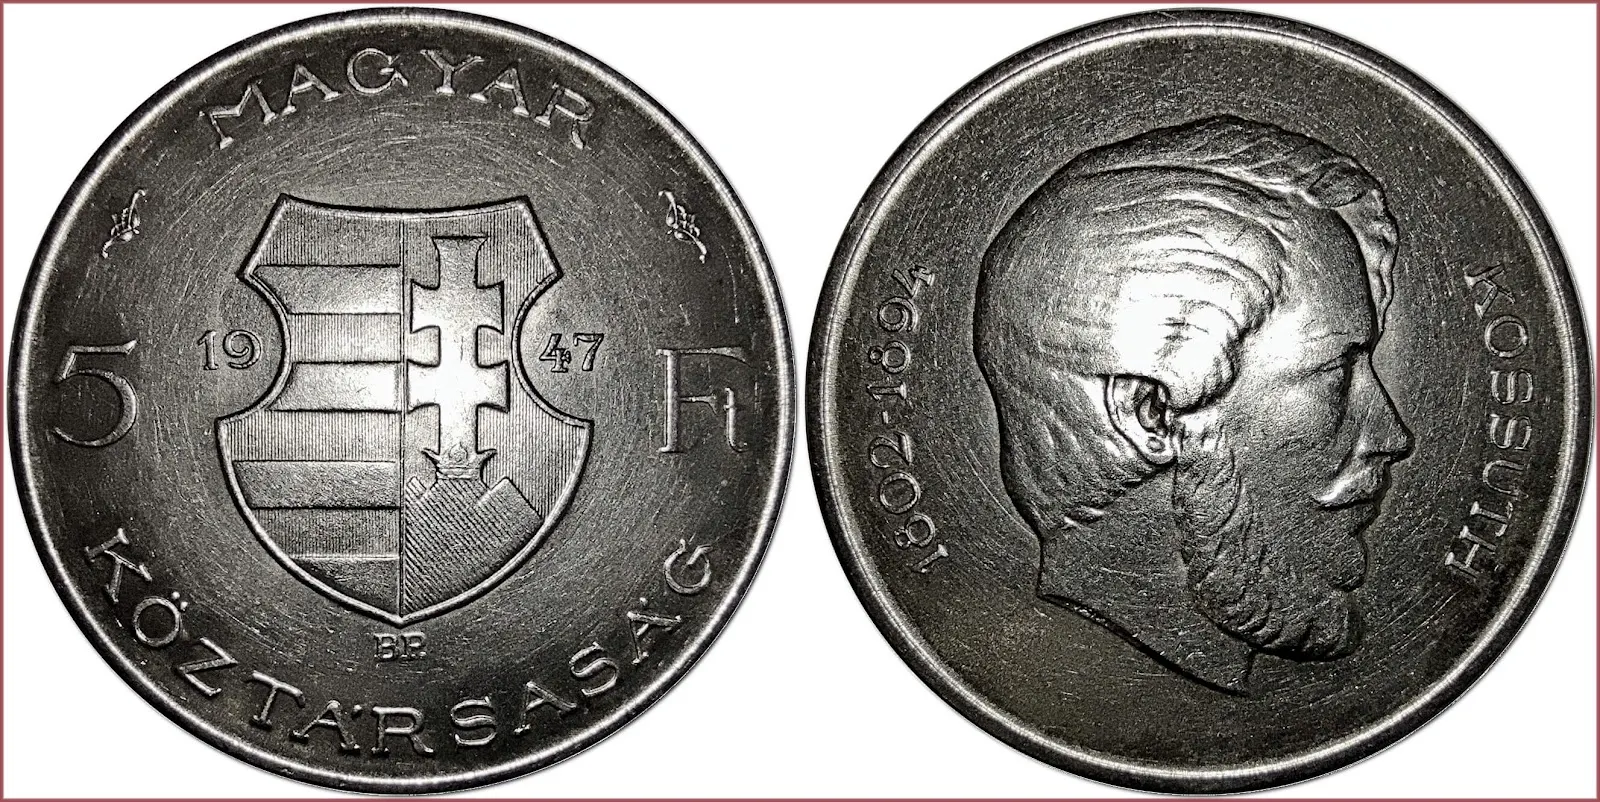 5 forint, 1947: Hungarian Republic